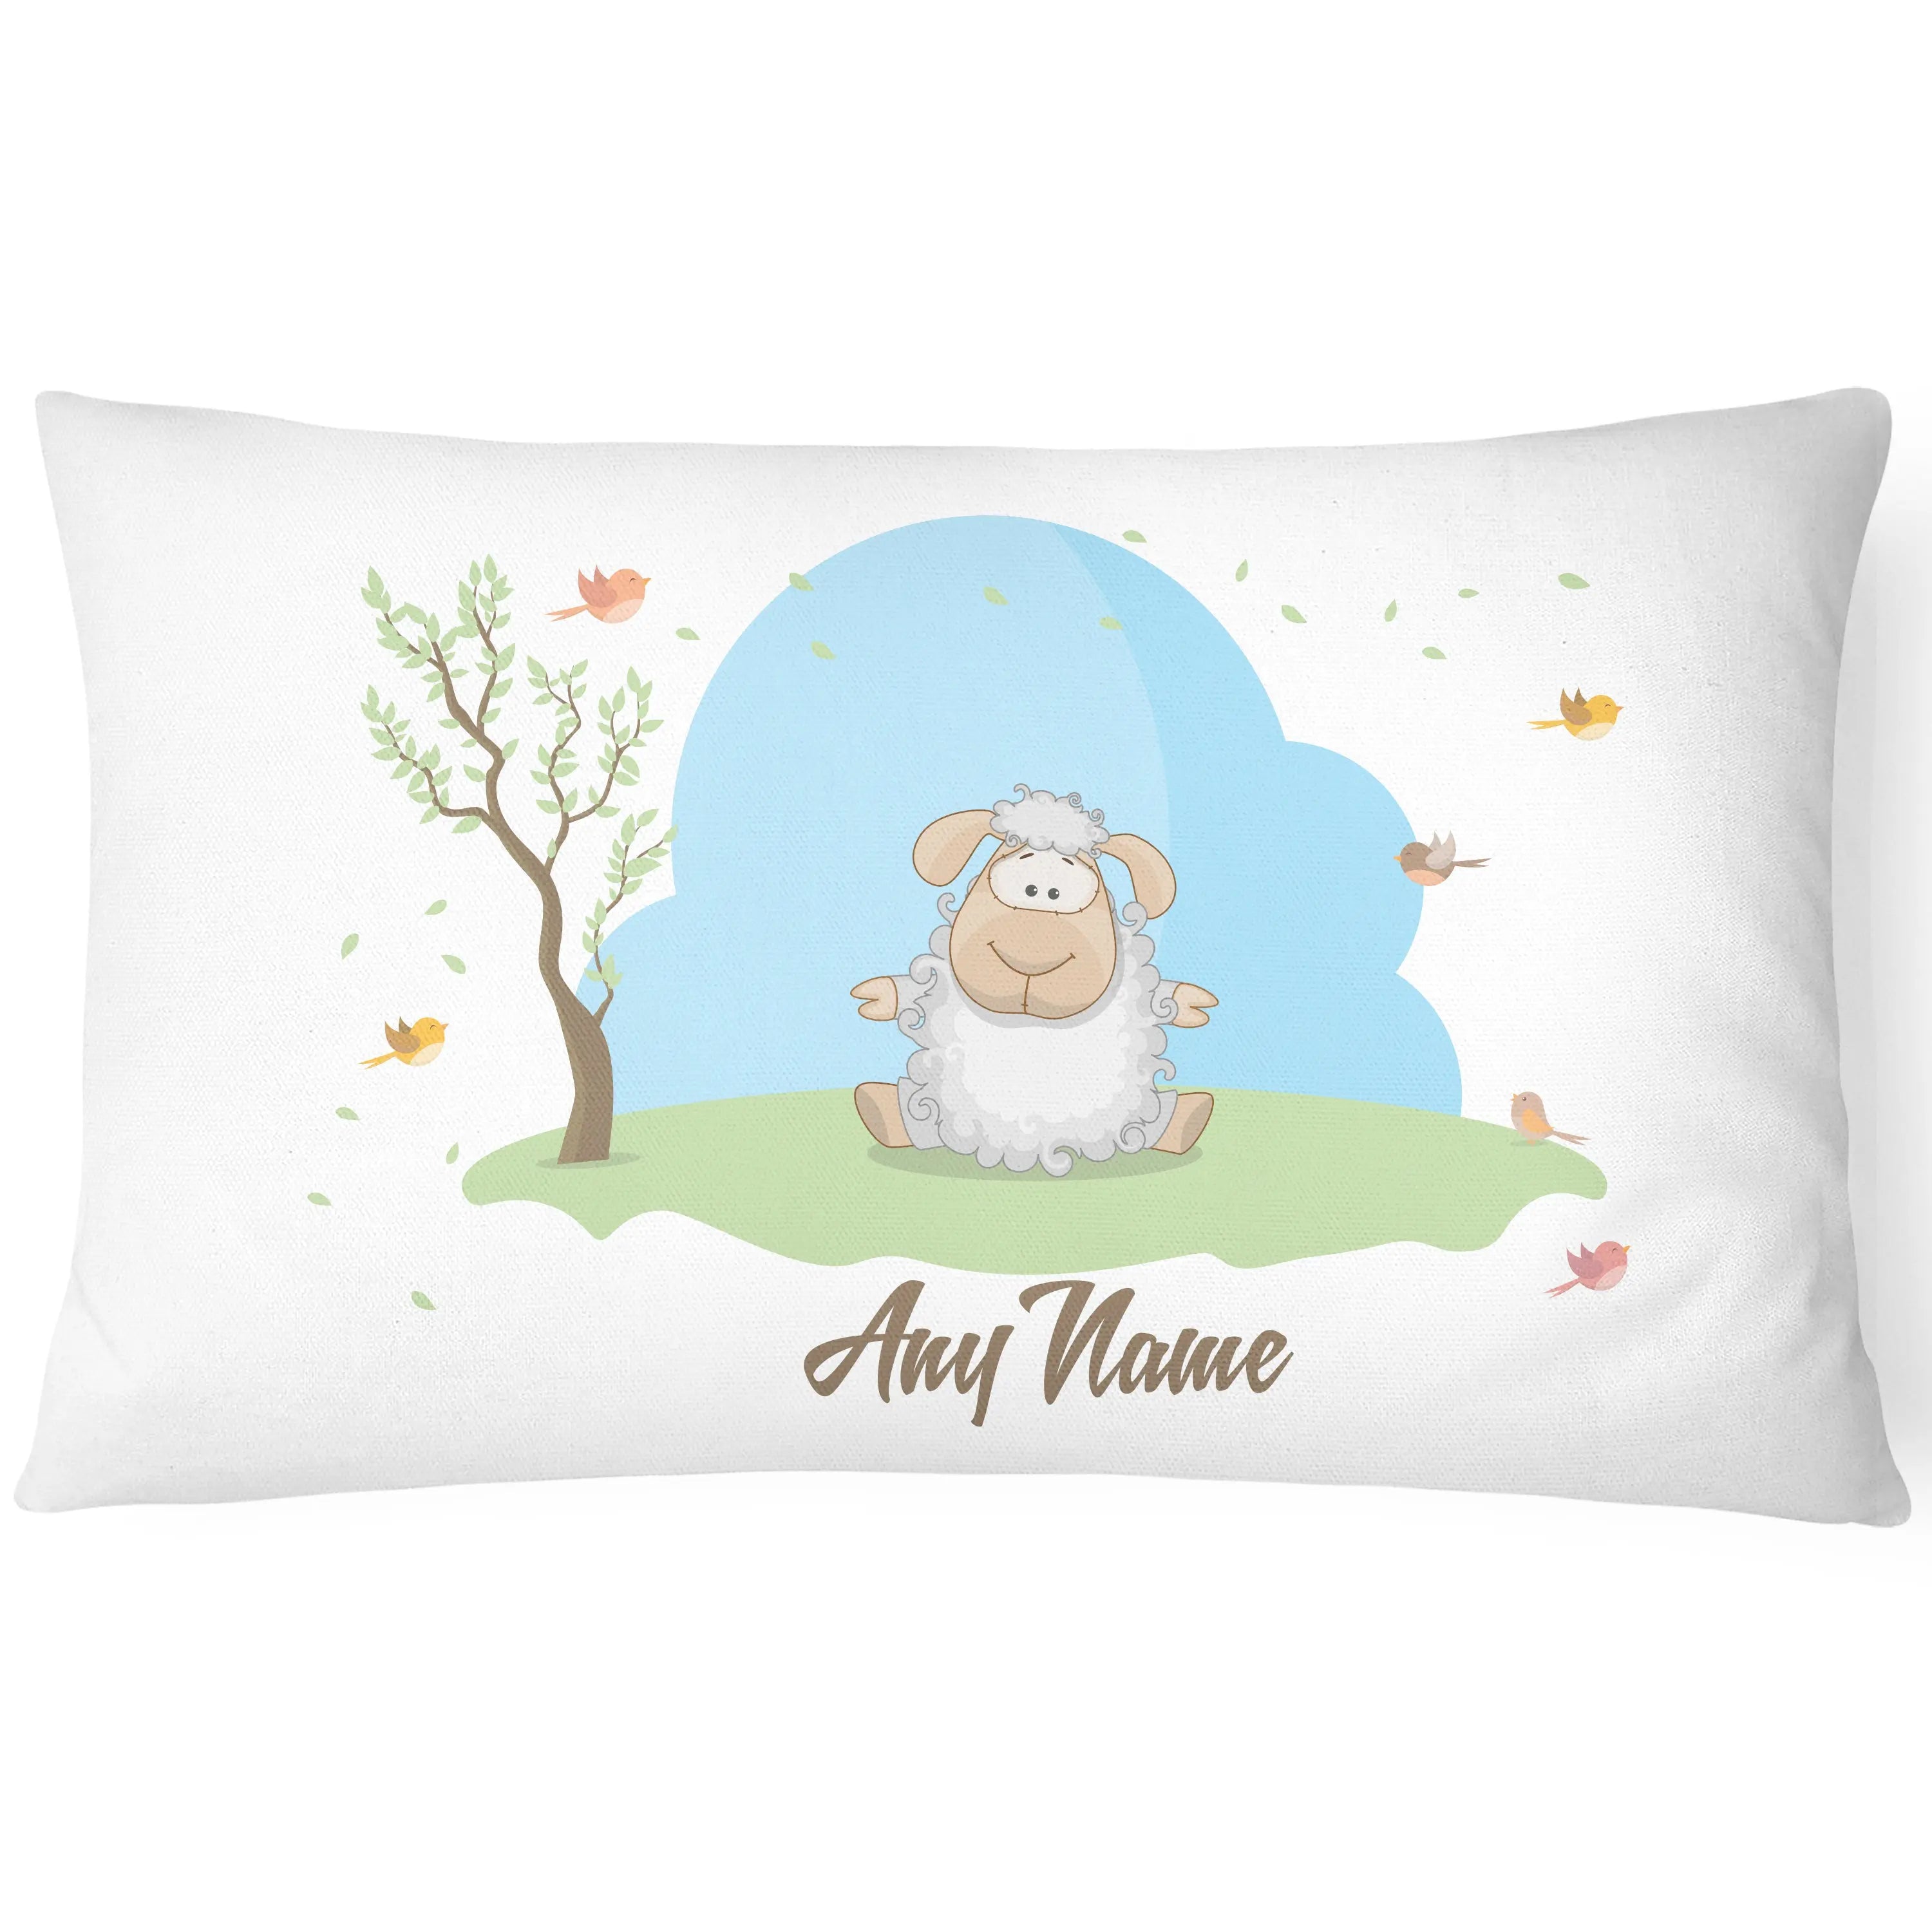 Personalised Children's Pillowcase Cute Animal - Fluffly - CushionPop